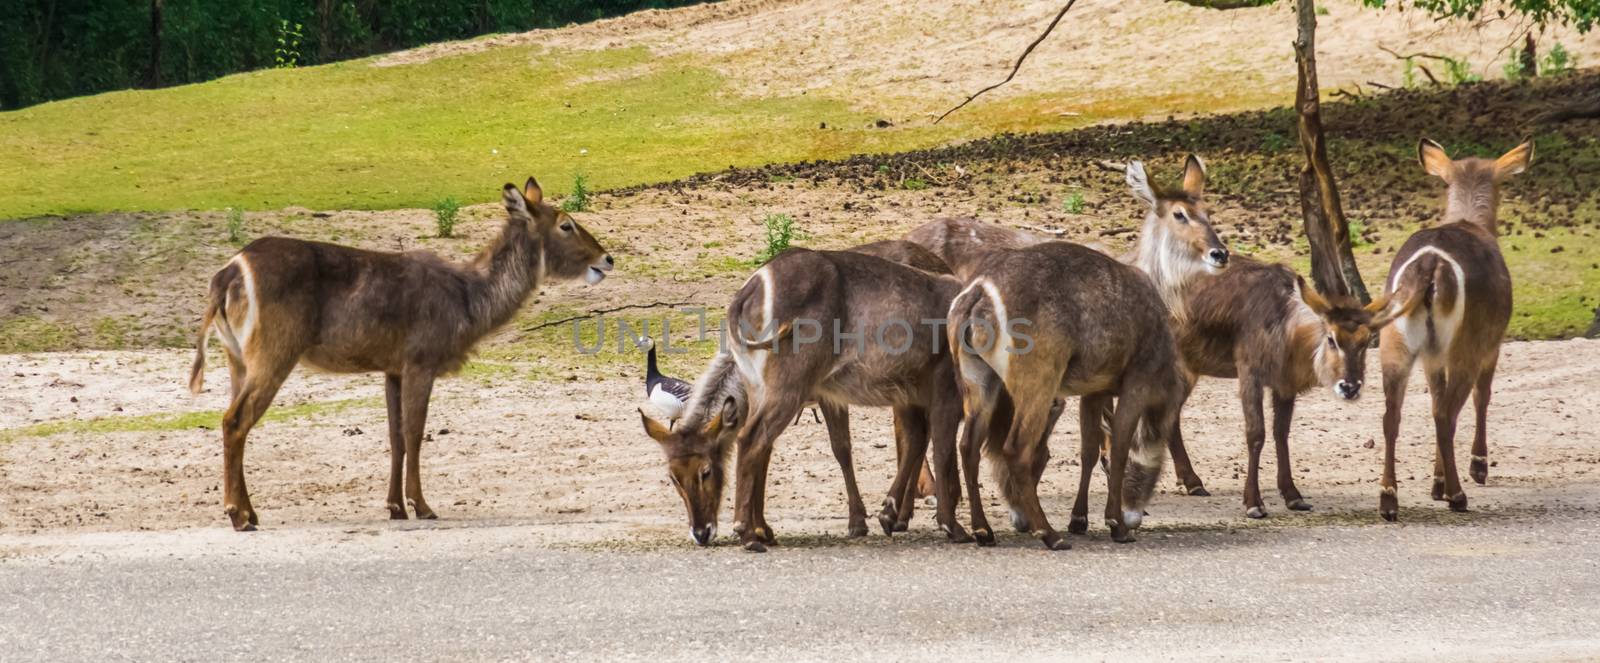 herd of female waterbucks standing together, antelope specie from Africa by charlottebleijenberg